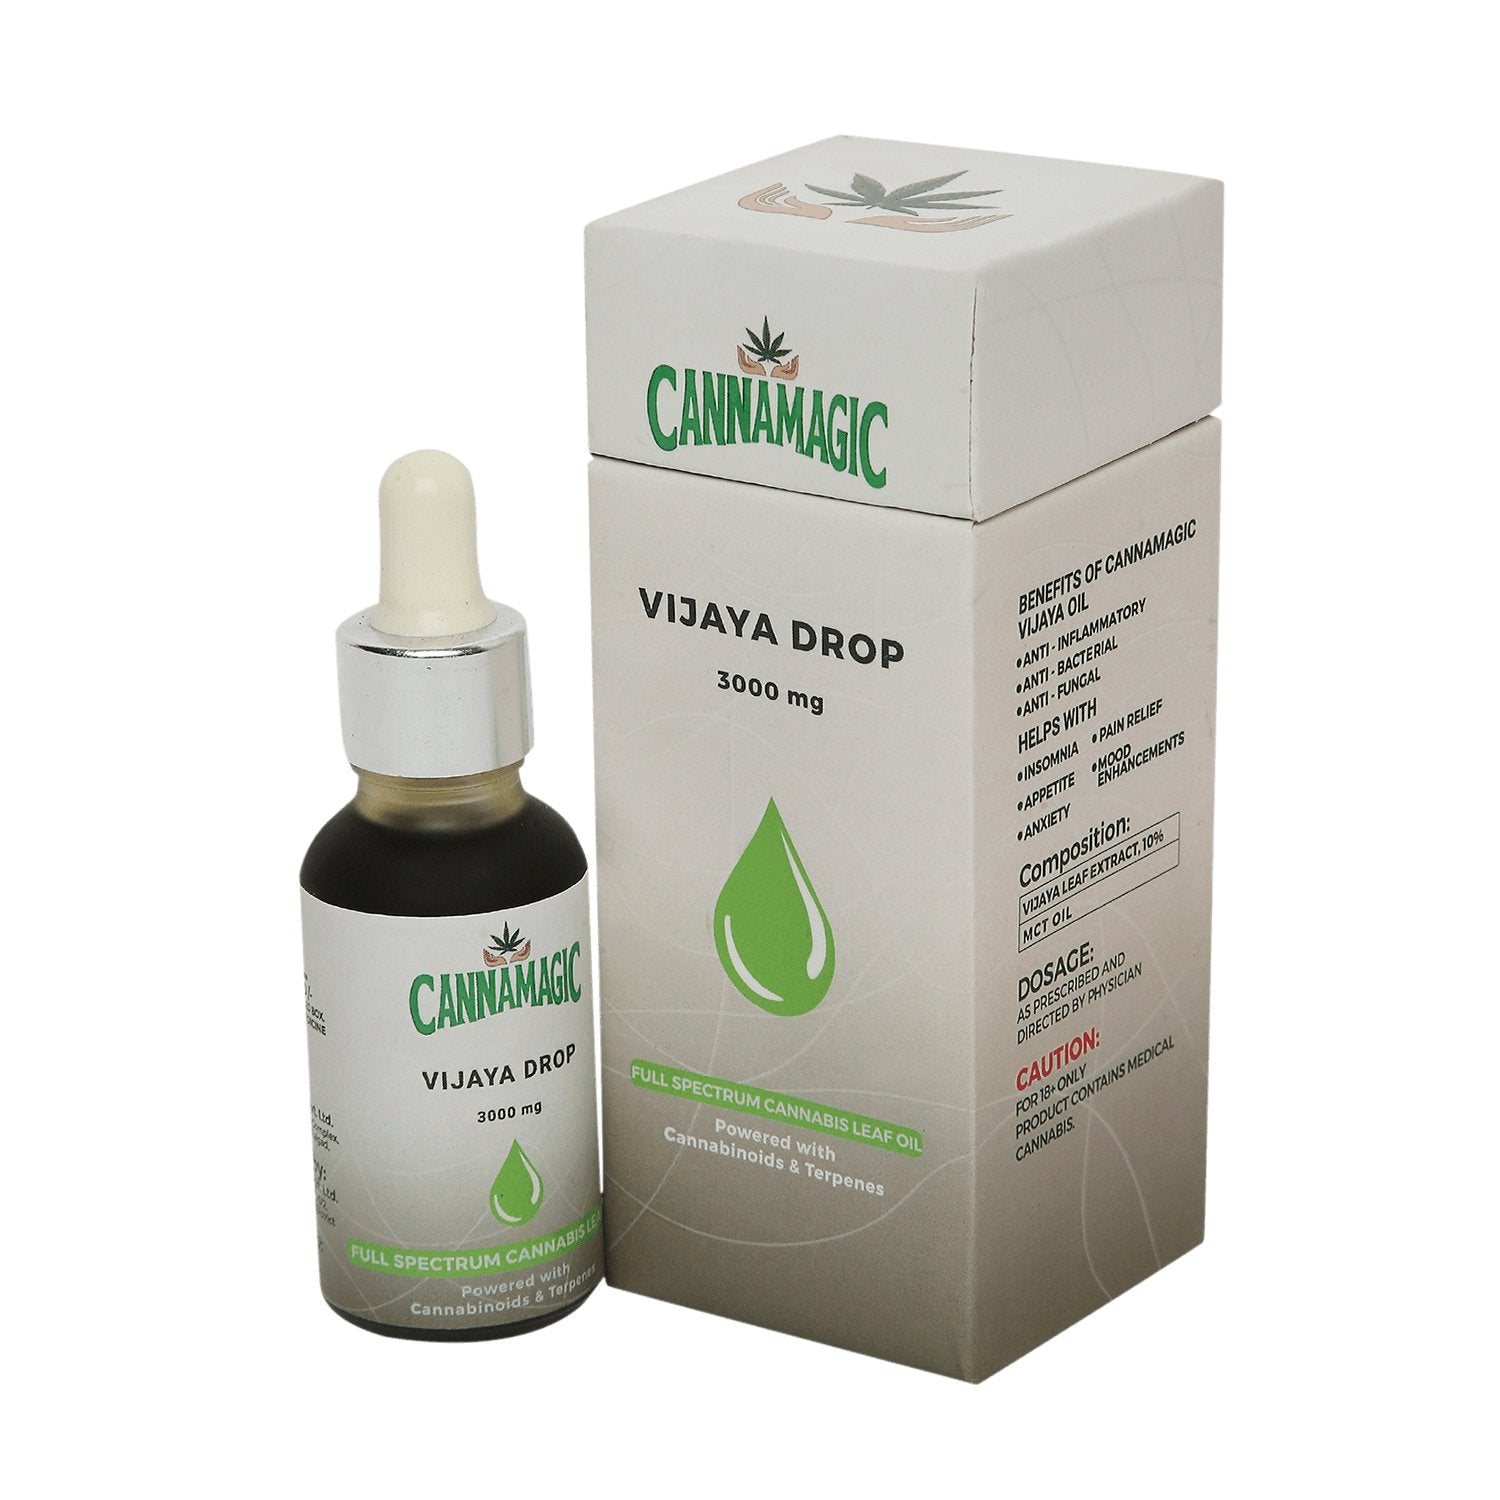 Cannamagic - Vijaya Drop (3000 mg) - Full Spectrum Cannabis Leaf Oil - CBD Store India